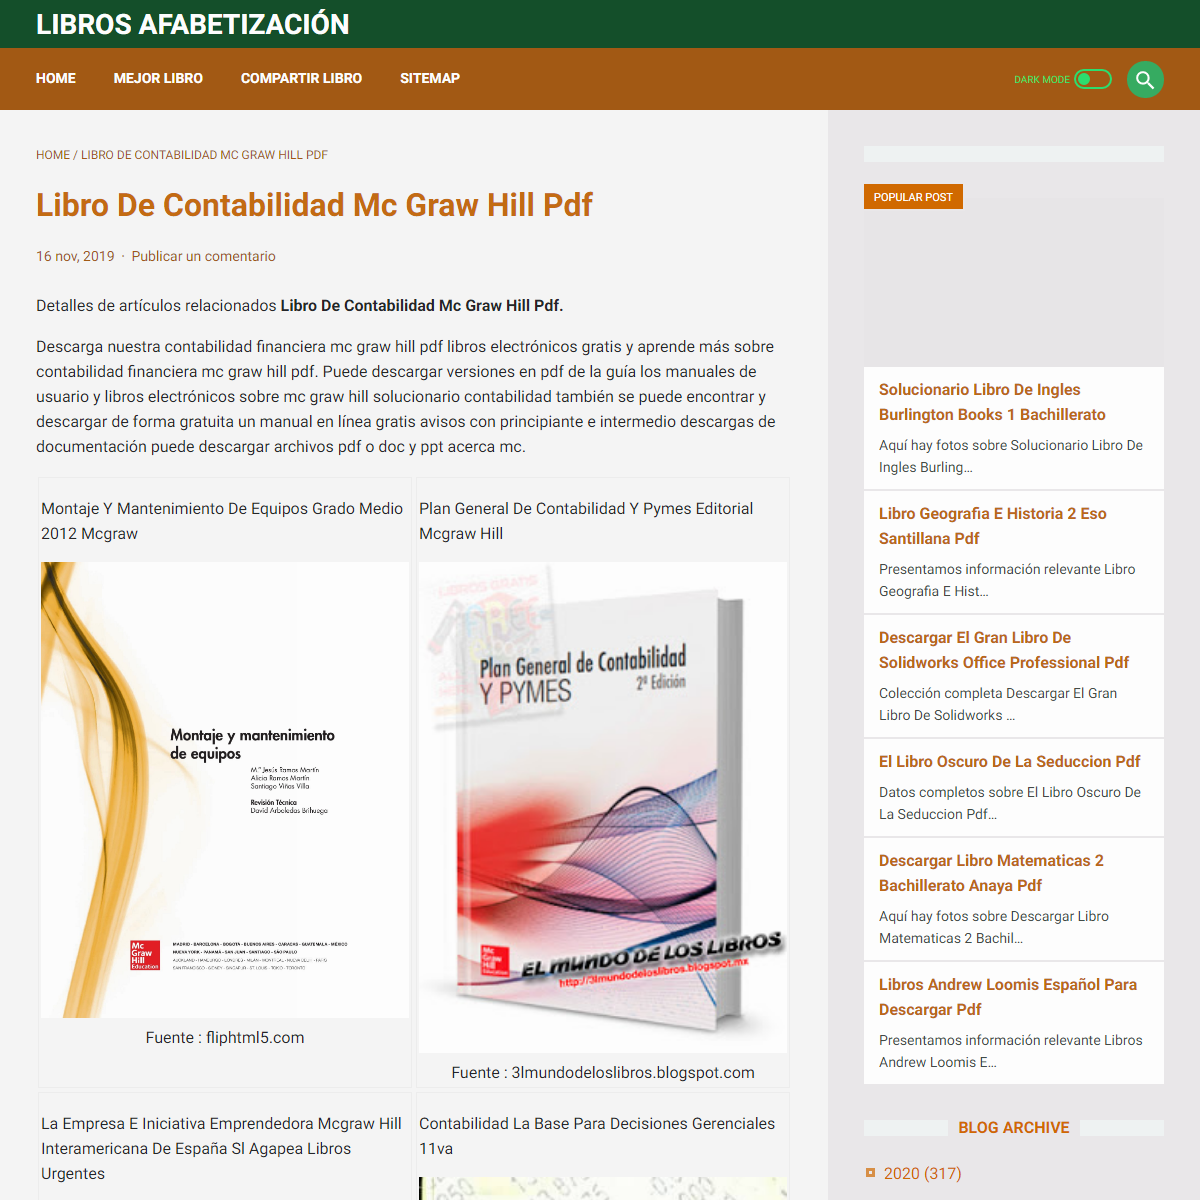 A complete backup of https://librosalfabetizacion.blogspot.com/2019/11/libro-de-contabilidad-mc-graw-hill-pdf.html